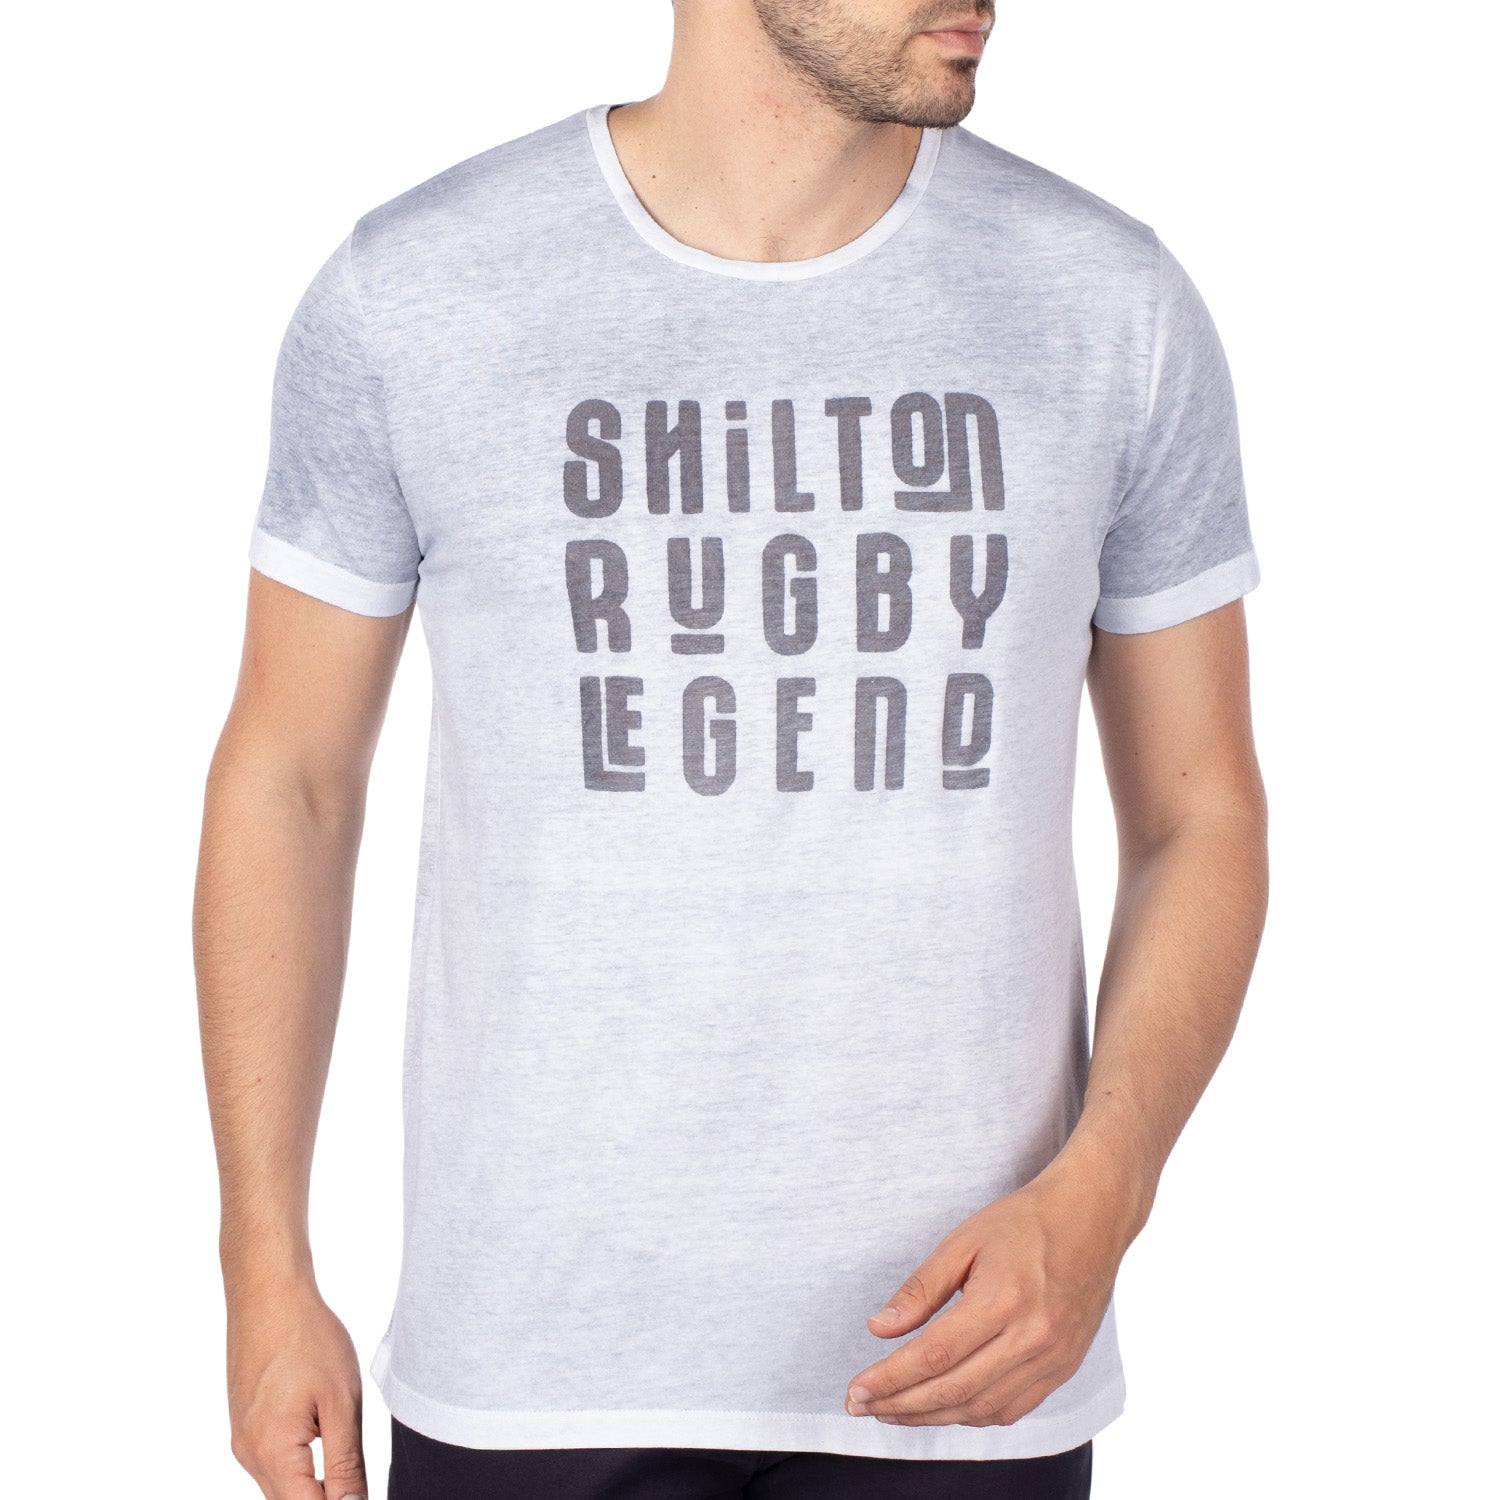 T-shirt rugby legend Navy - Shilton